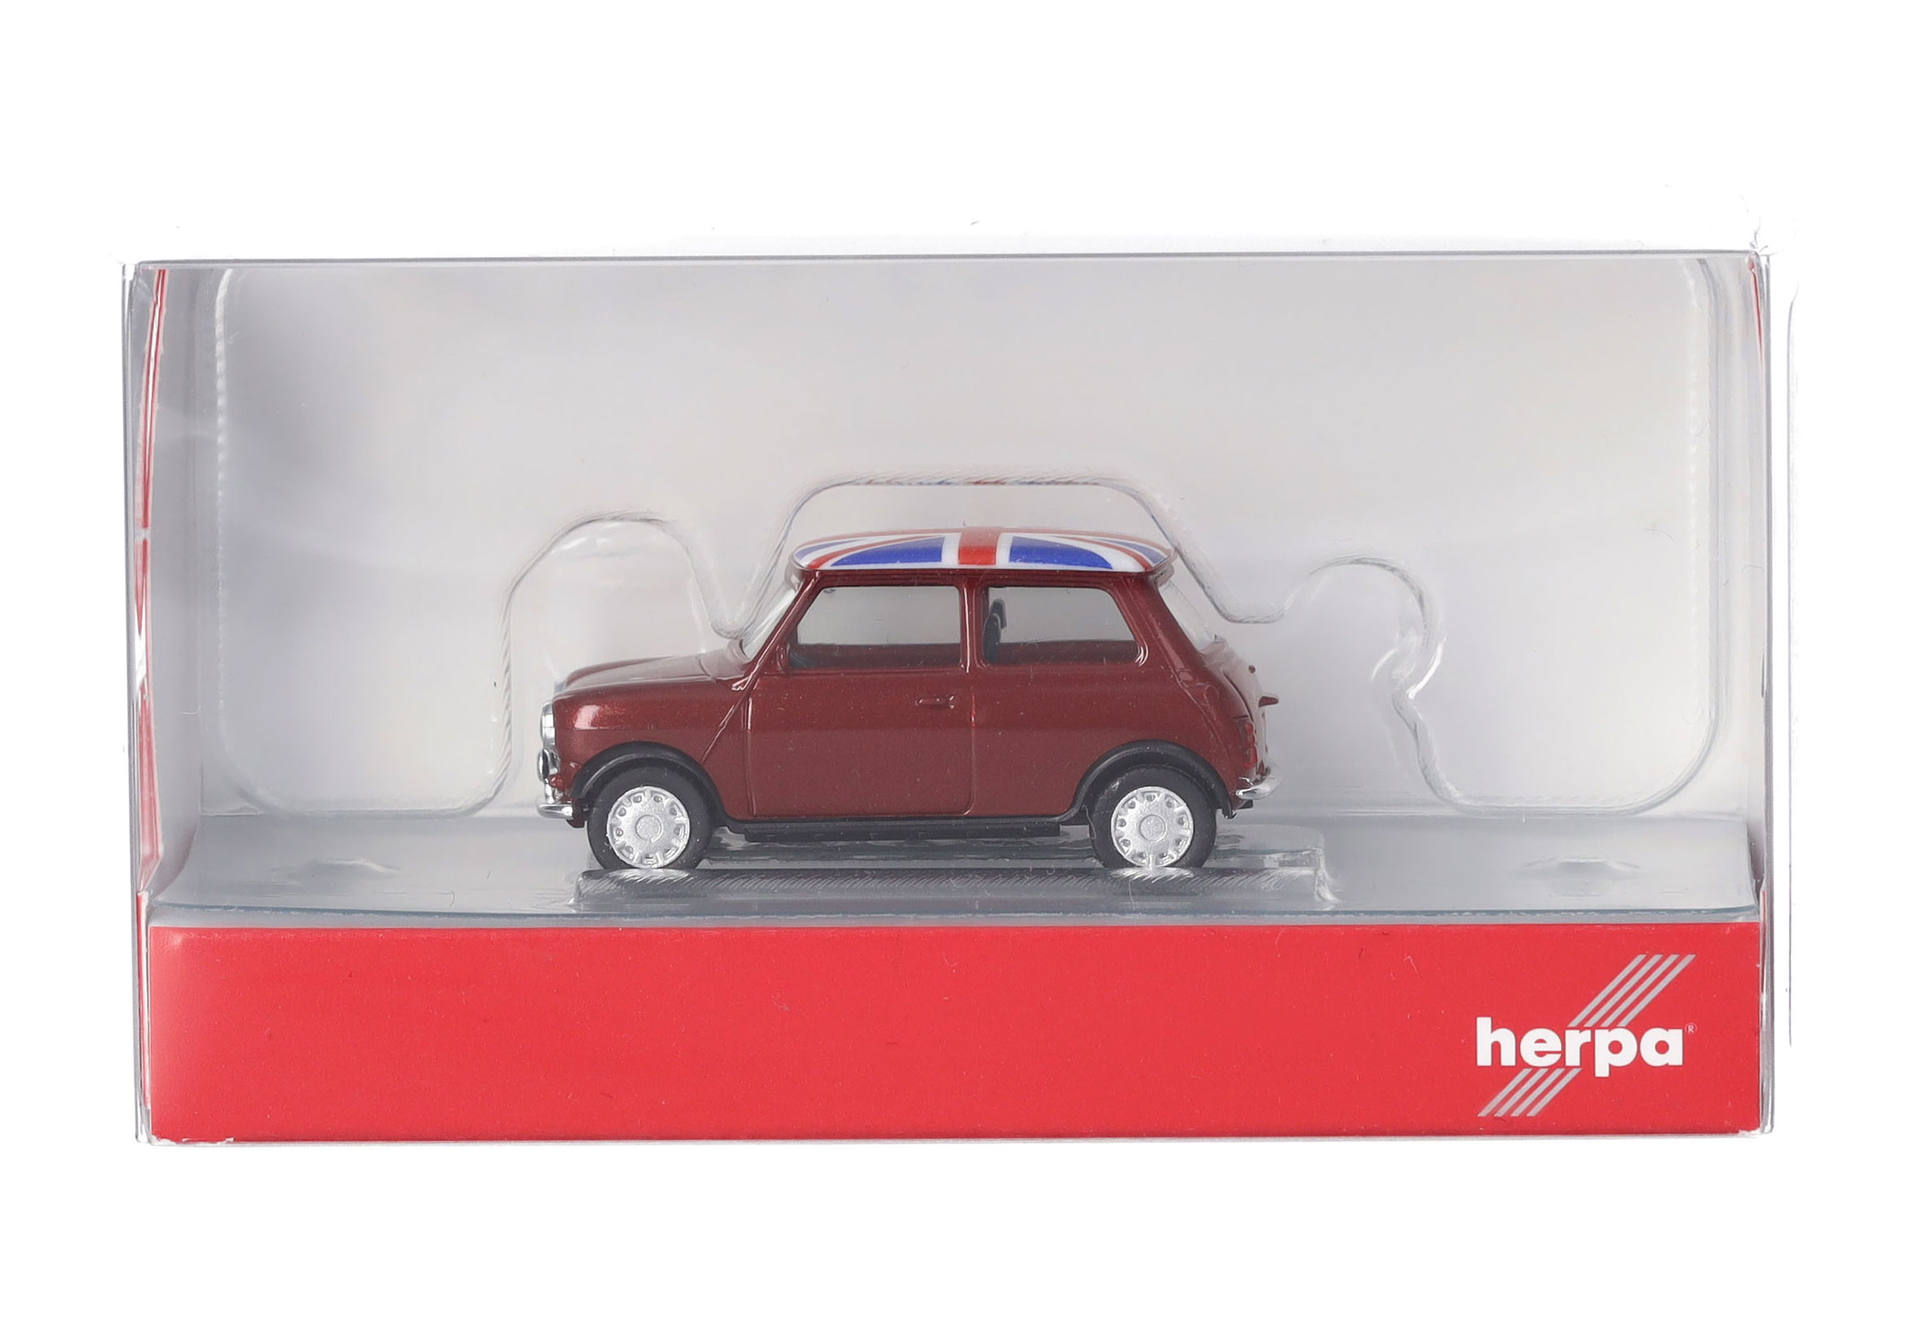 Mini Mayfair, right steering wheel with additional headlights, night fire red metallic